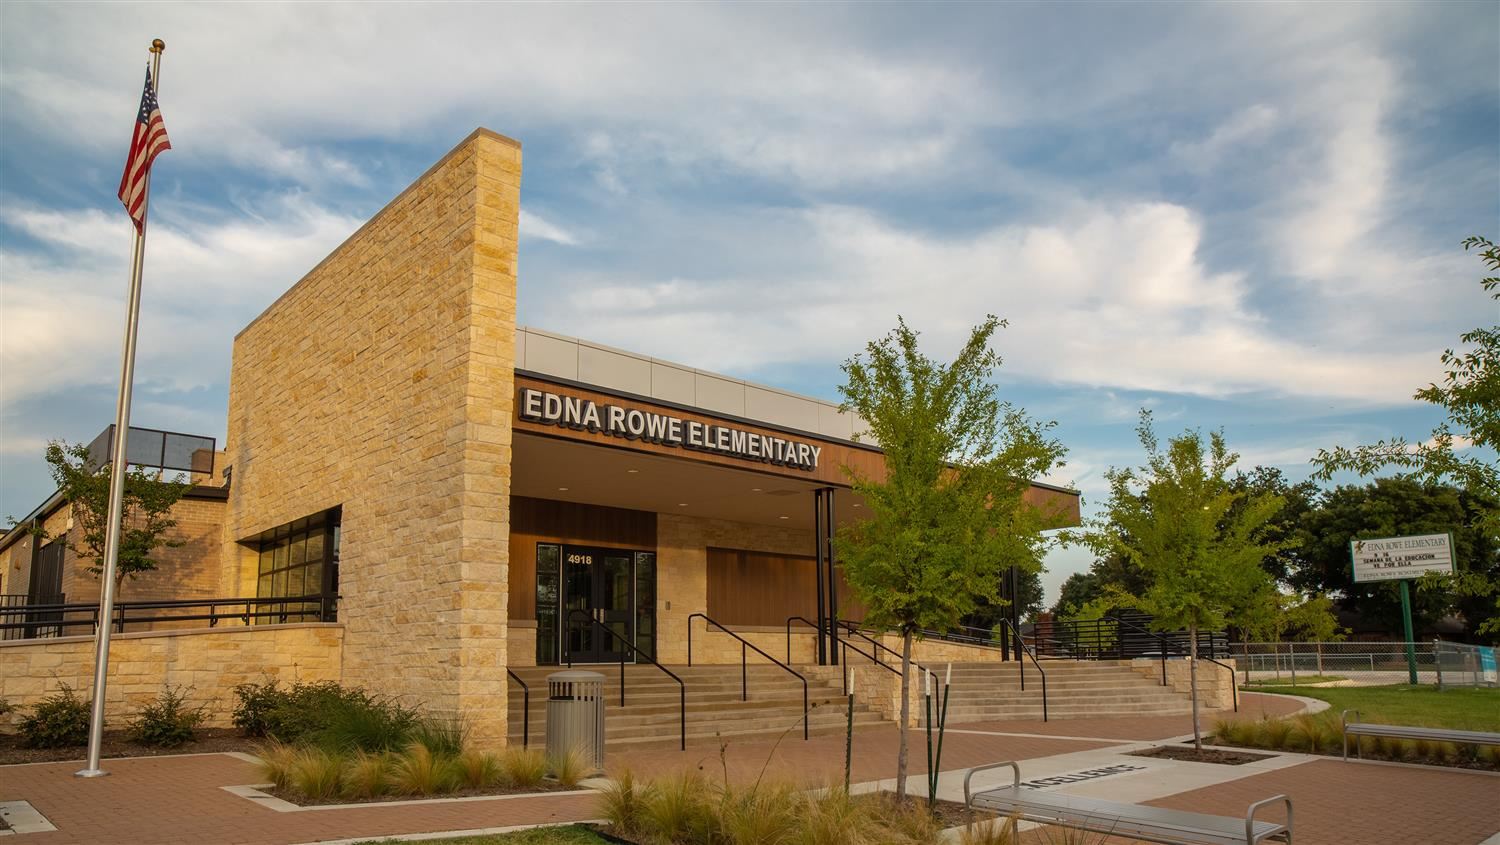 Edna Rowe Elementary School